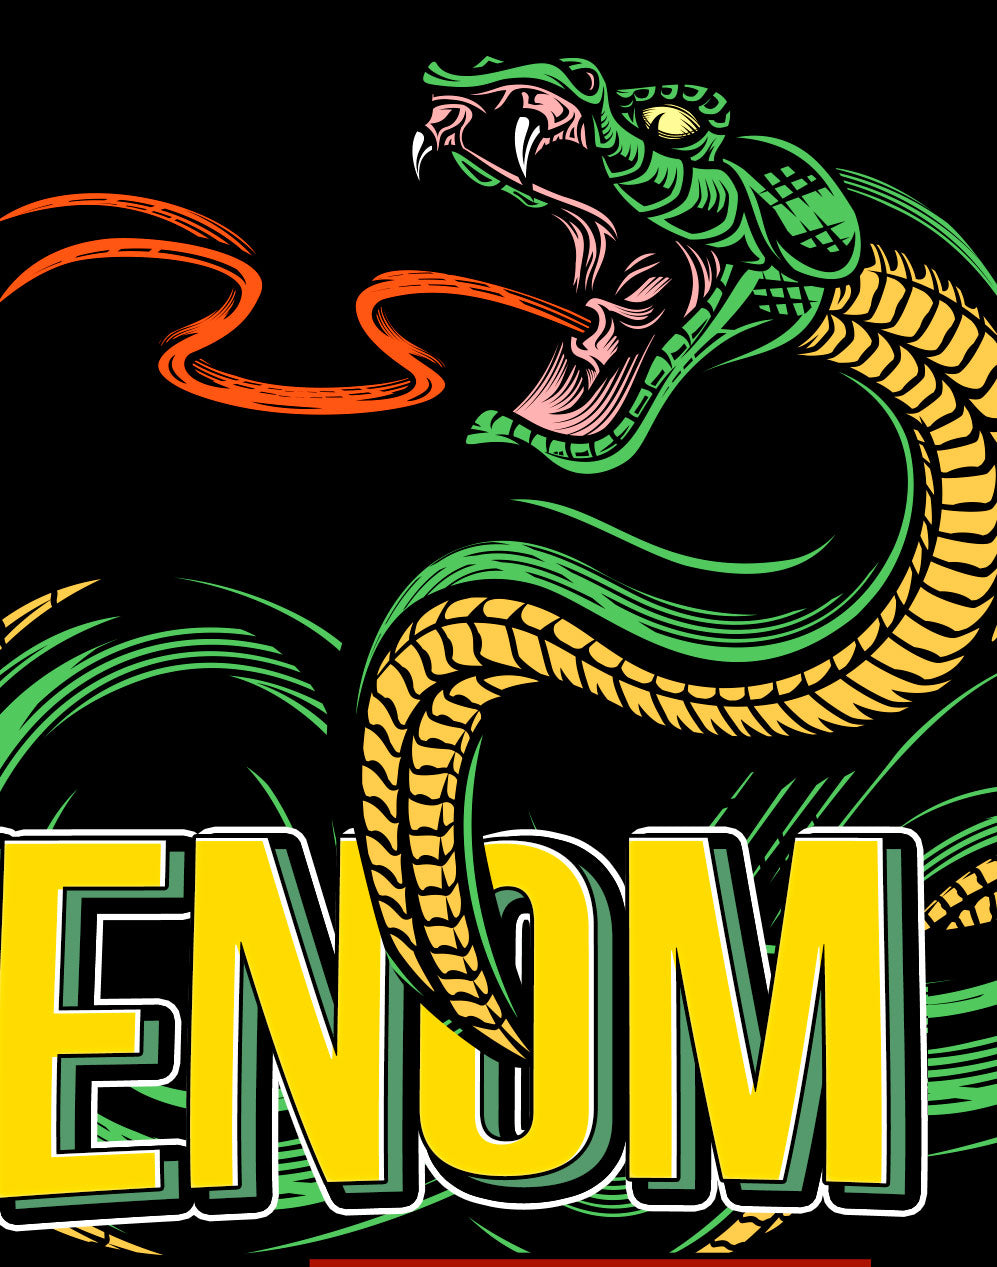 StonerDays Venom OG Hoodie design close-up with vibrant snake graphic on black background